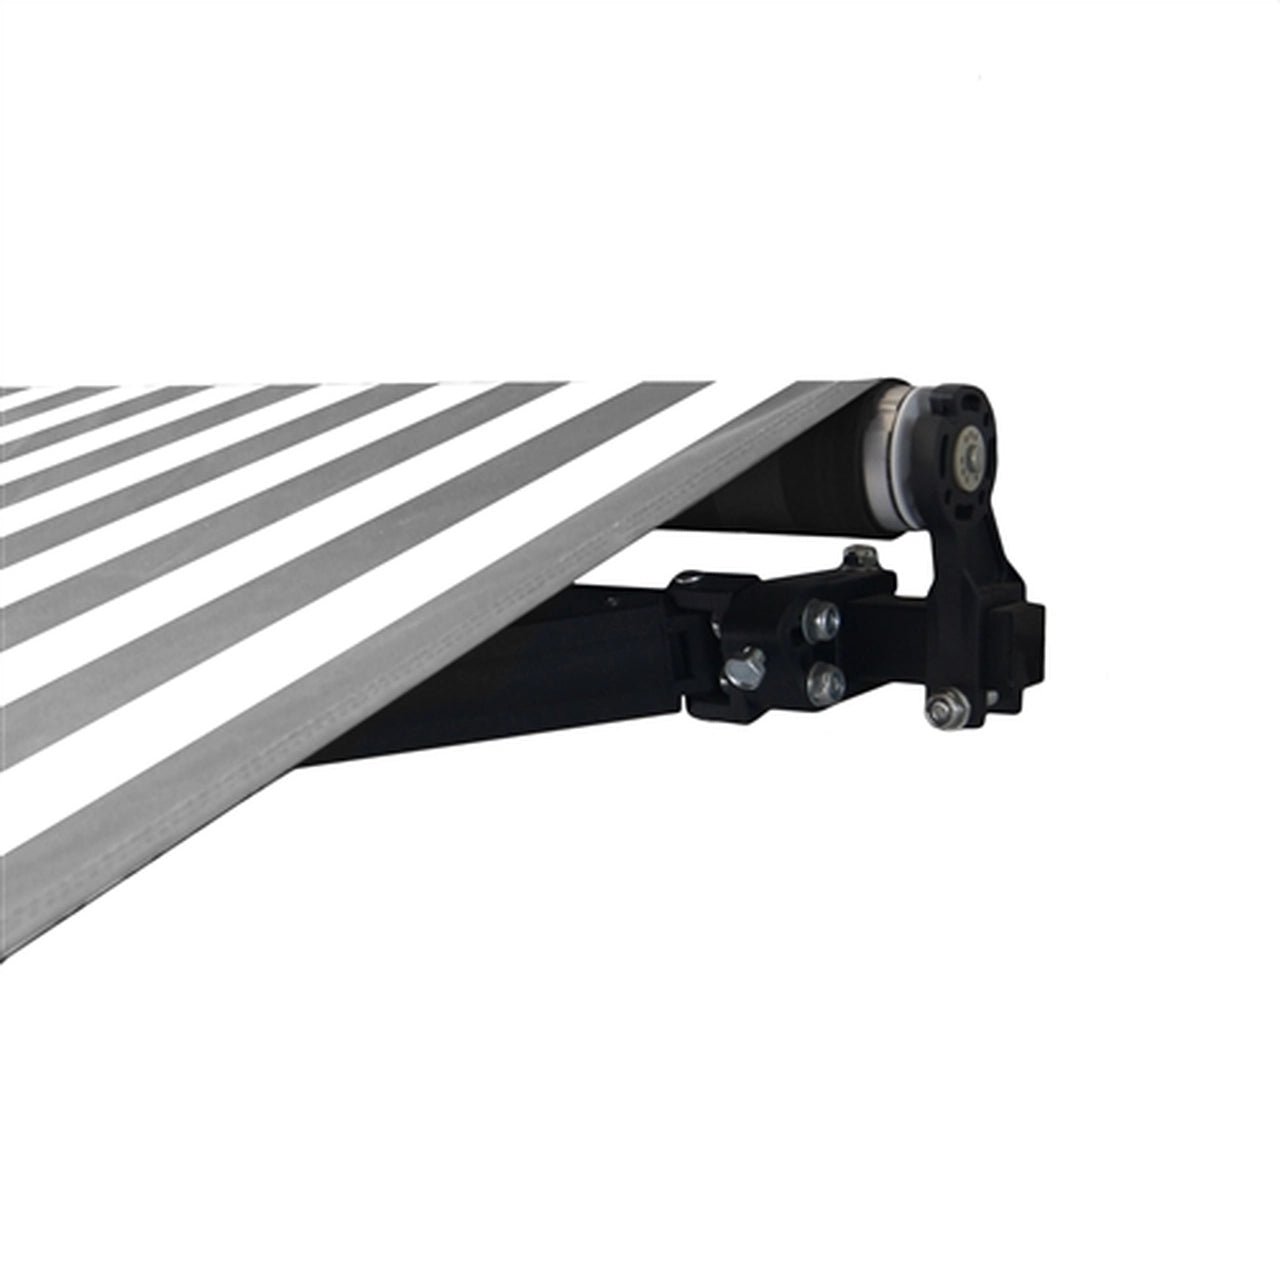 Aleko Motorized Retractable Black Frame Patio Awning 16 x 10